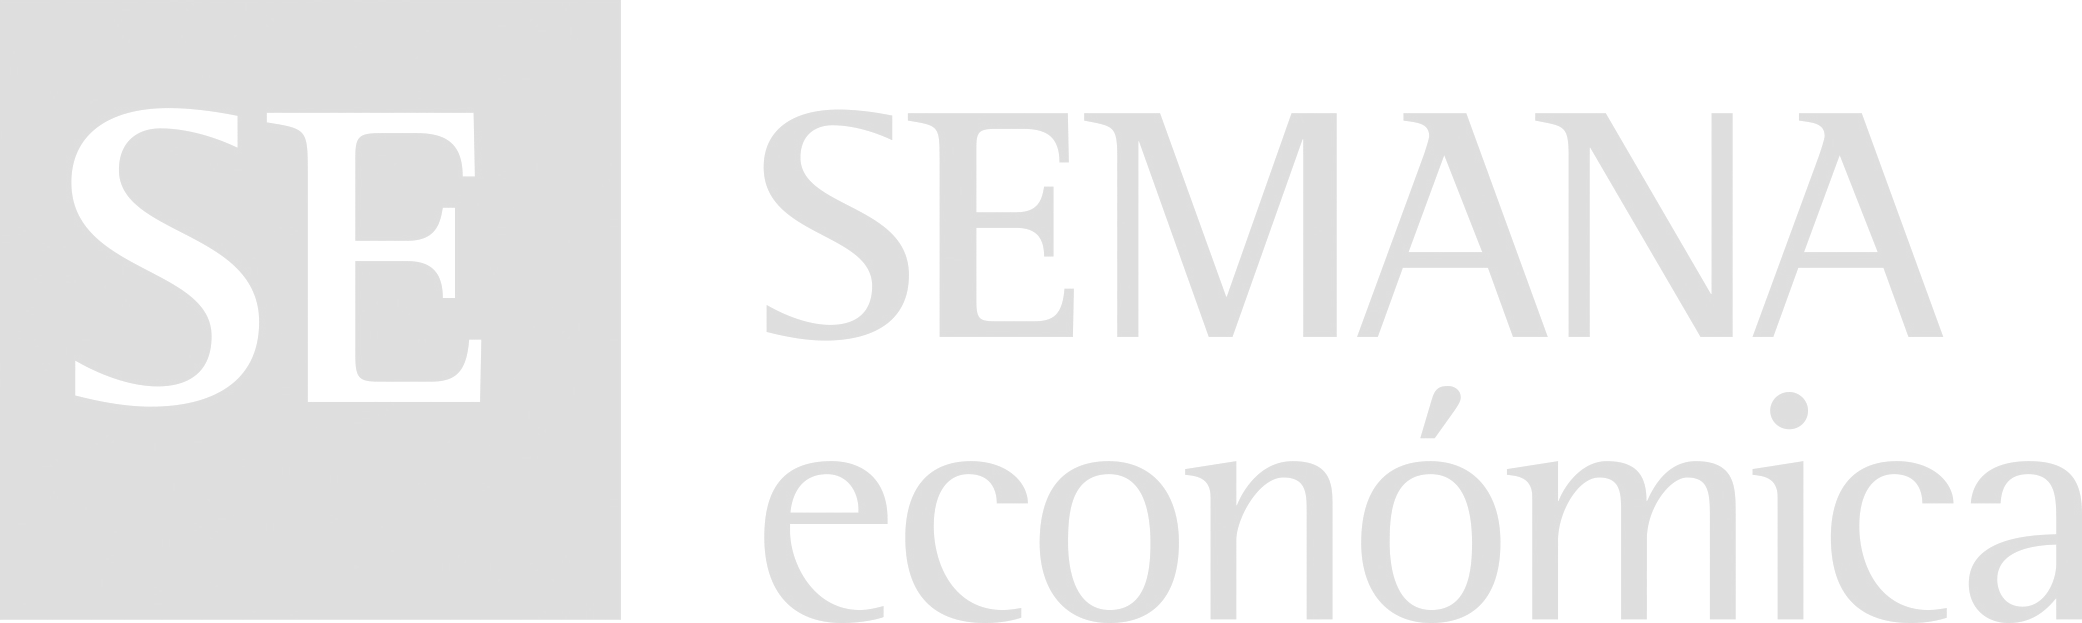 Semana Económica logo